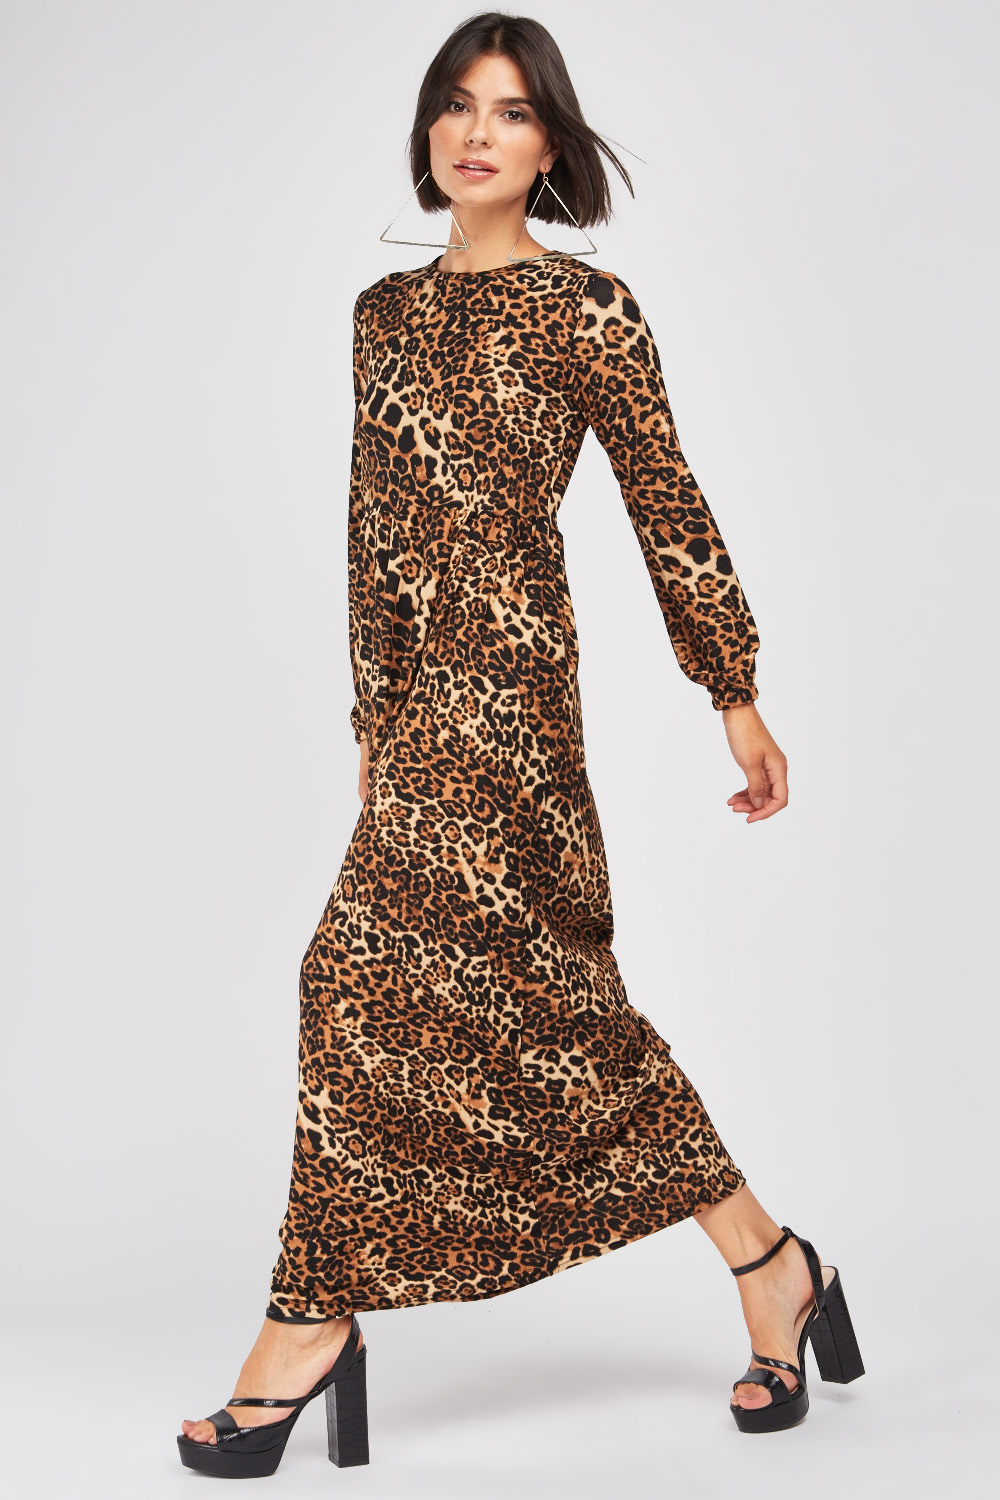 Long Sleeve Leopard Print Maxi Dress - Just $7